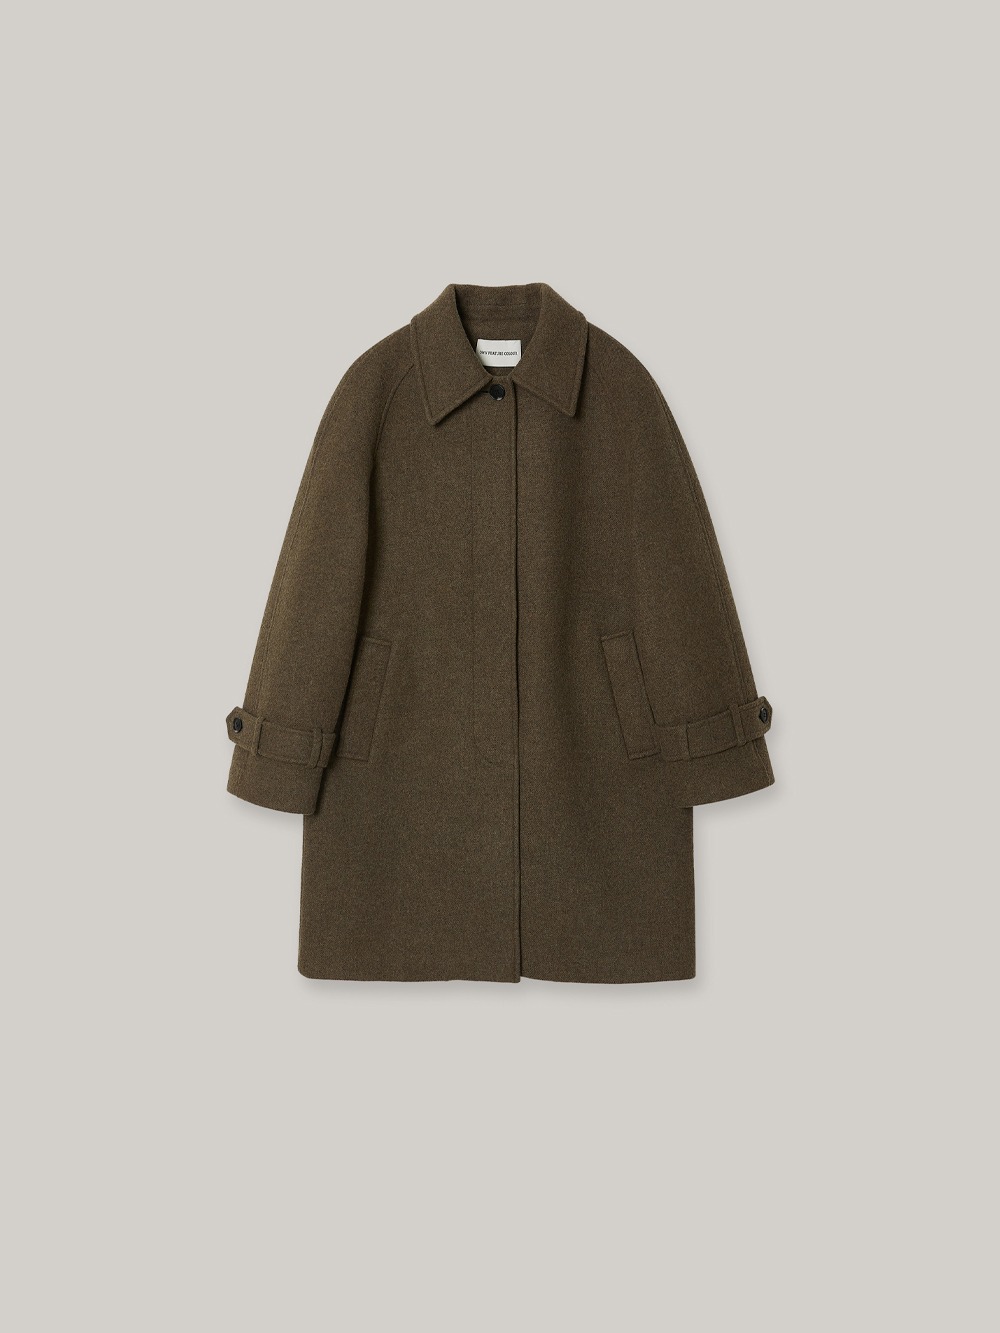 Raglan Sleeve Half Coat (khaki brown)